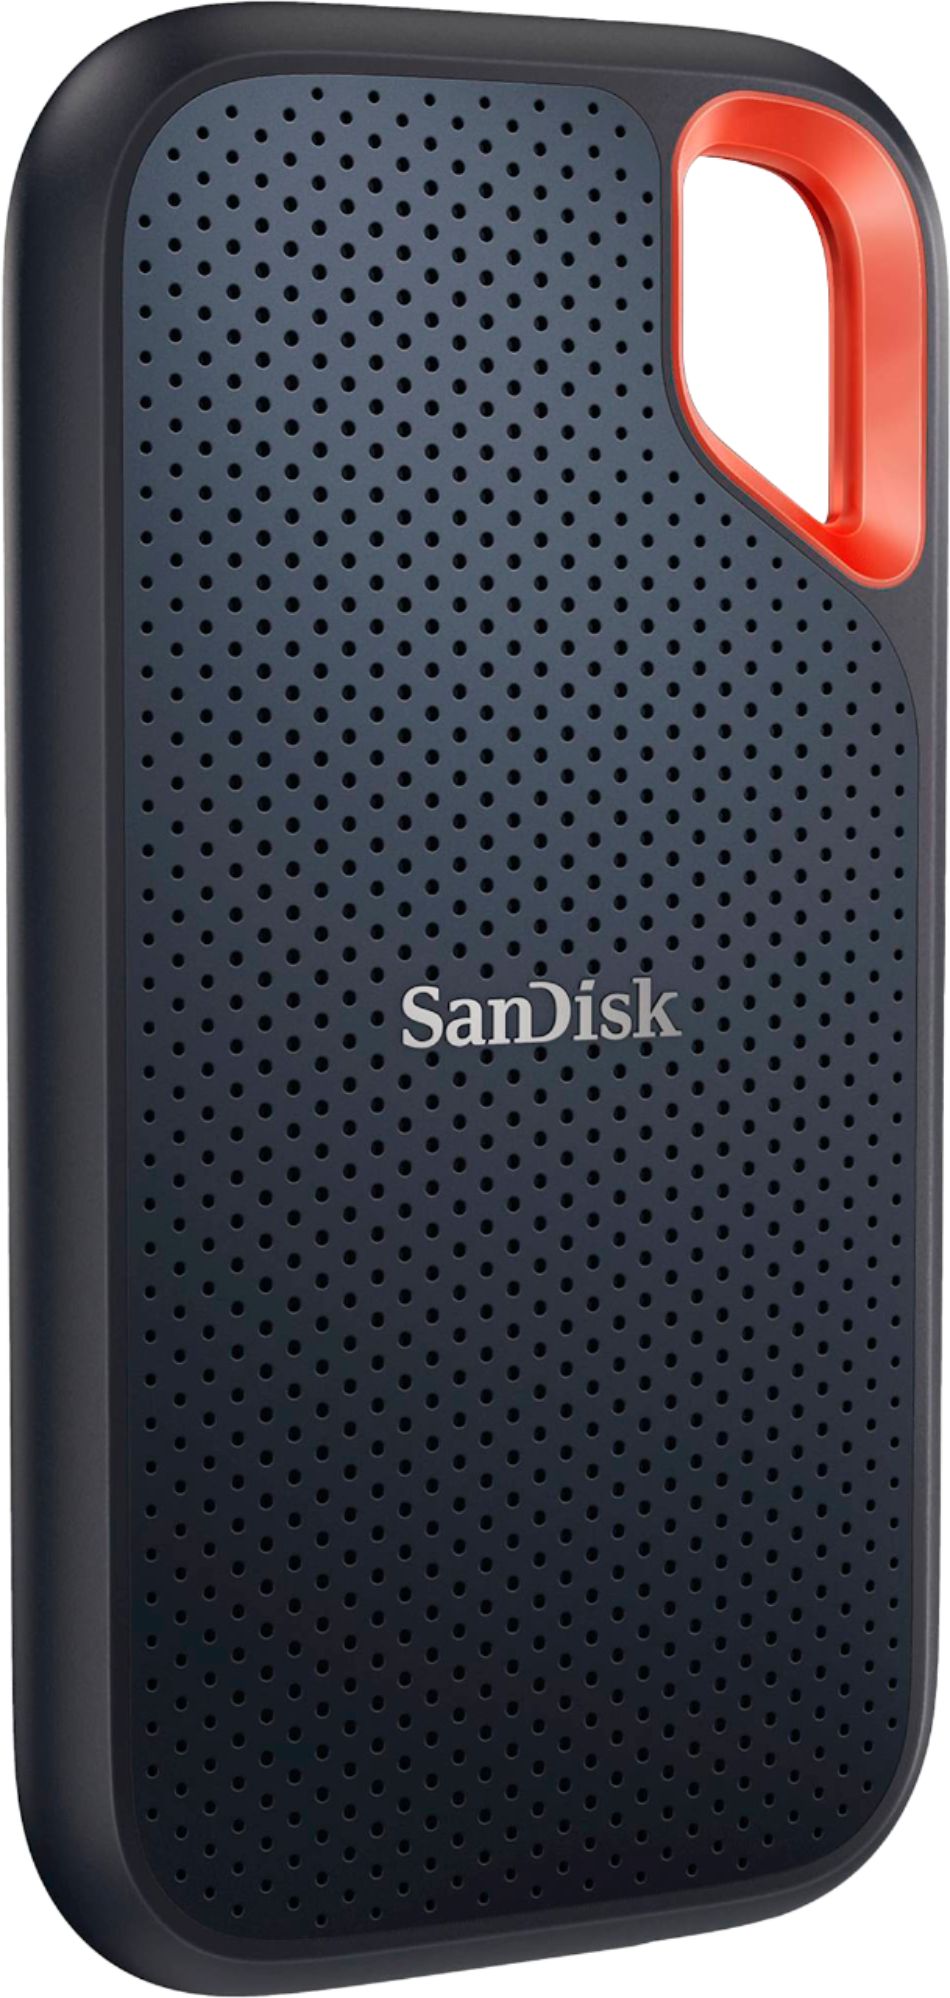 Angle View: SanDisk - Ultra 32GB USB 3.0 Type-C Flash Drive - Sleek Black